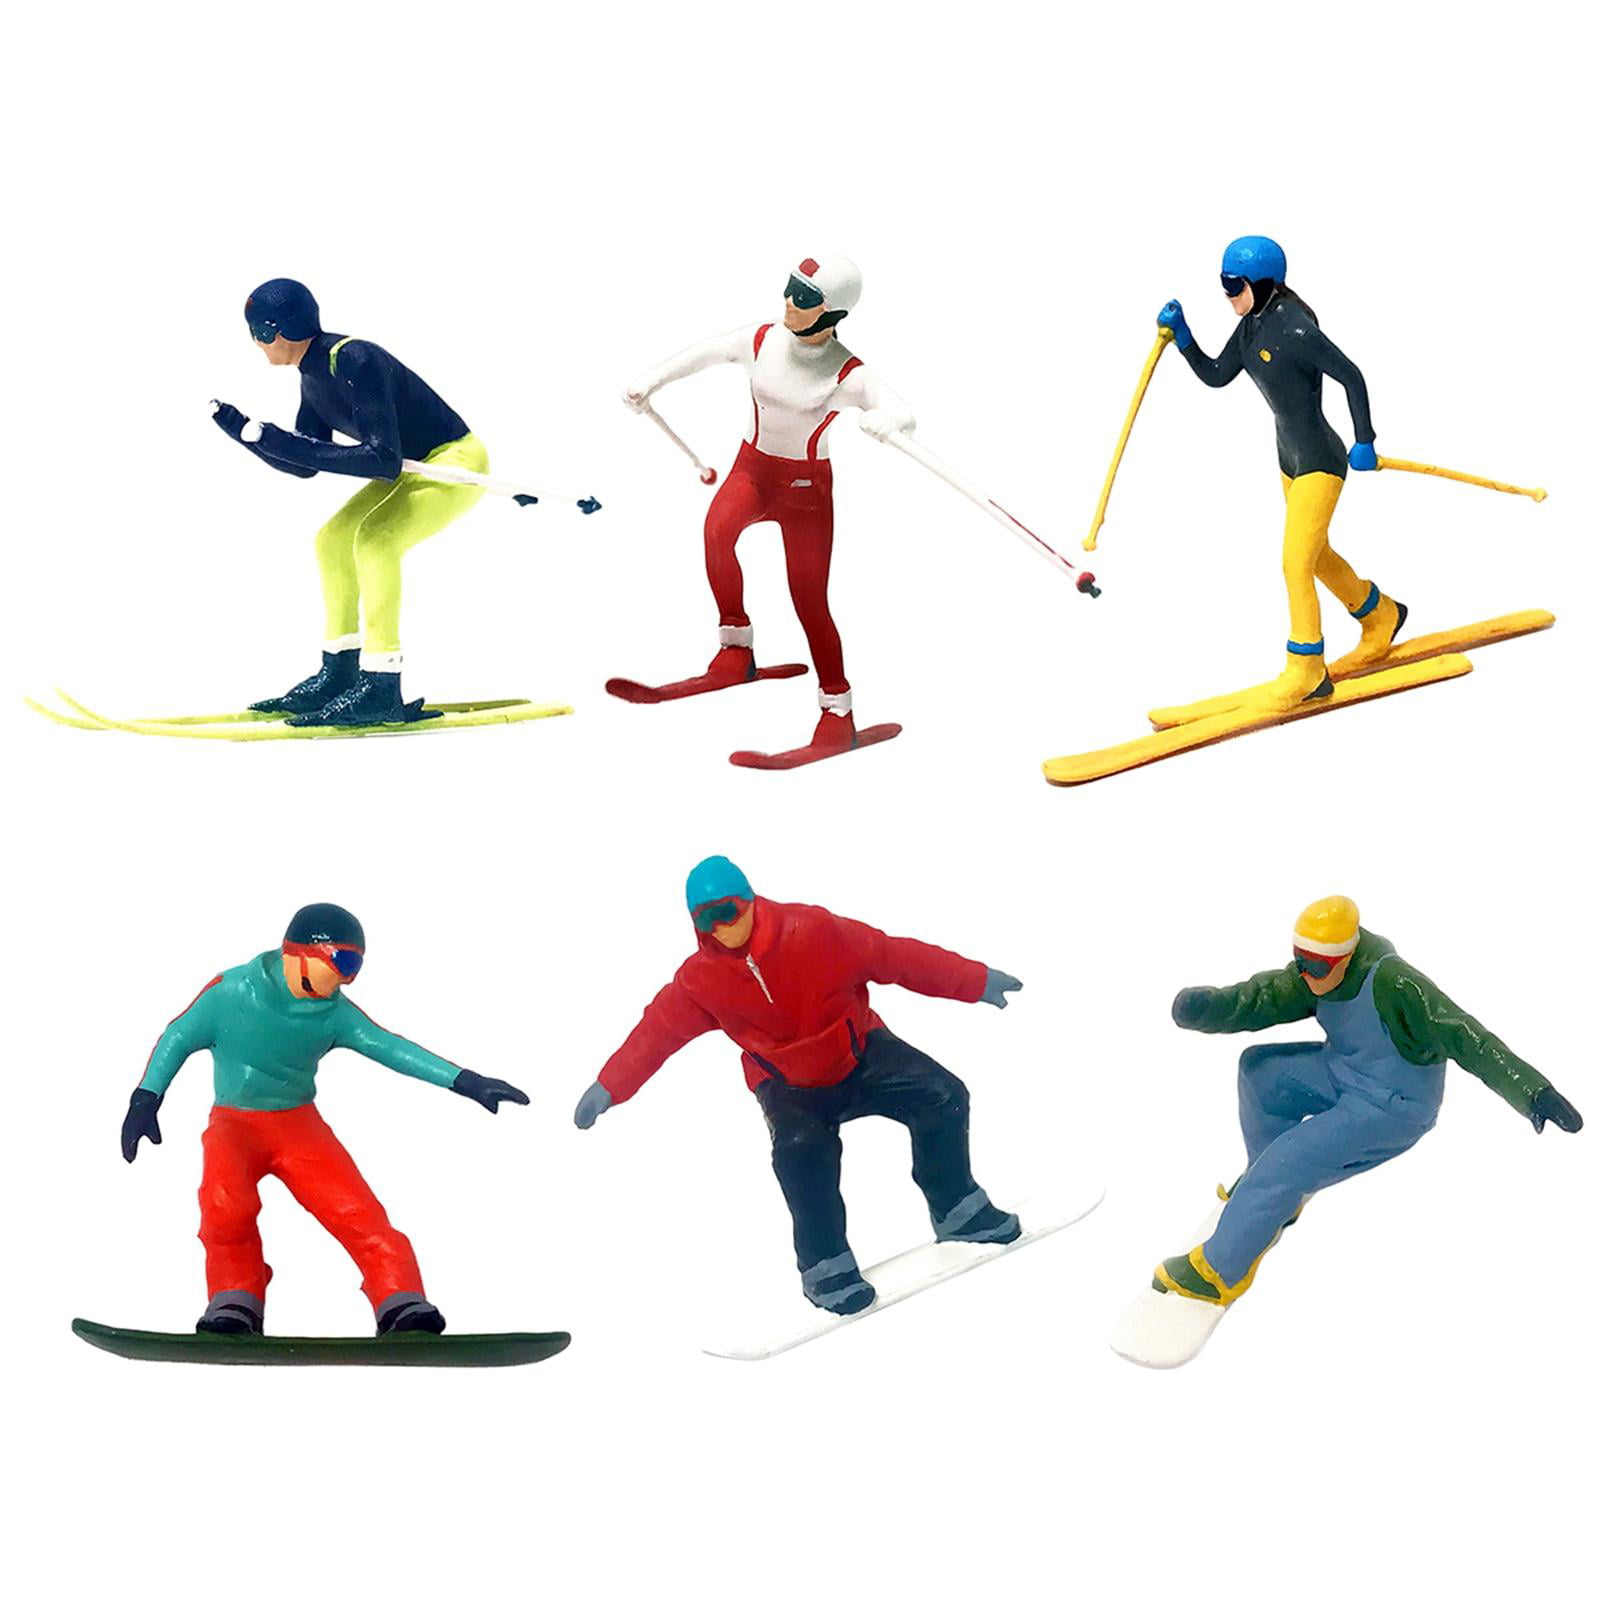 1/64 Scale Skiing Model People Figures Mini People Model Skier Figures  Ornament for Miniature Scenes Dollhouse Sand Table Layout Decoration ,  Orange